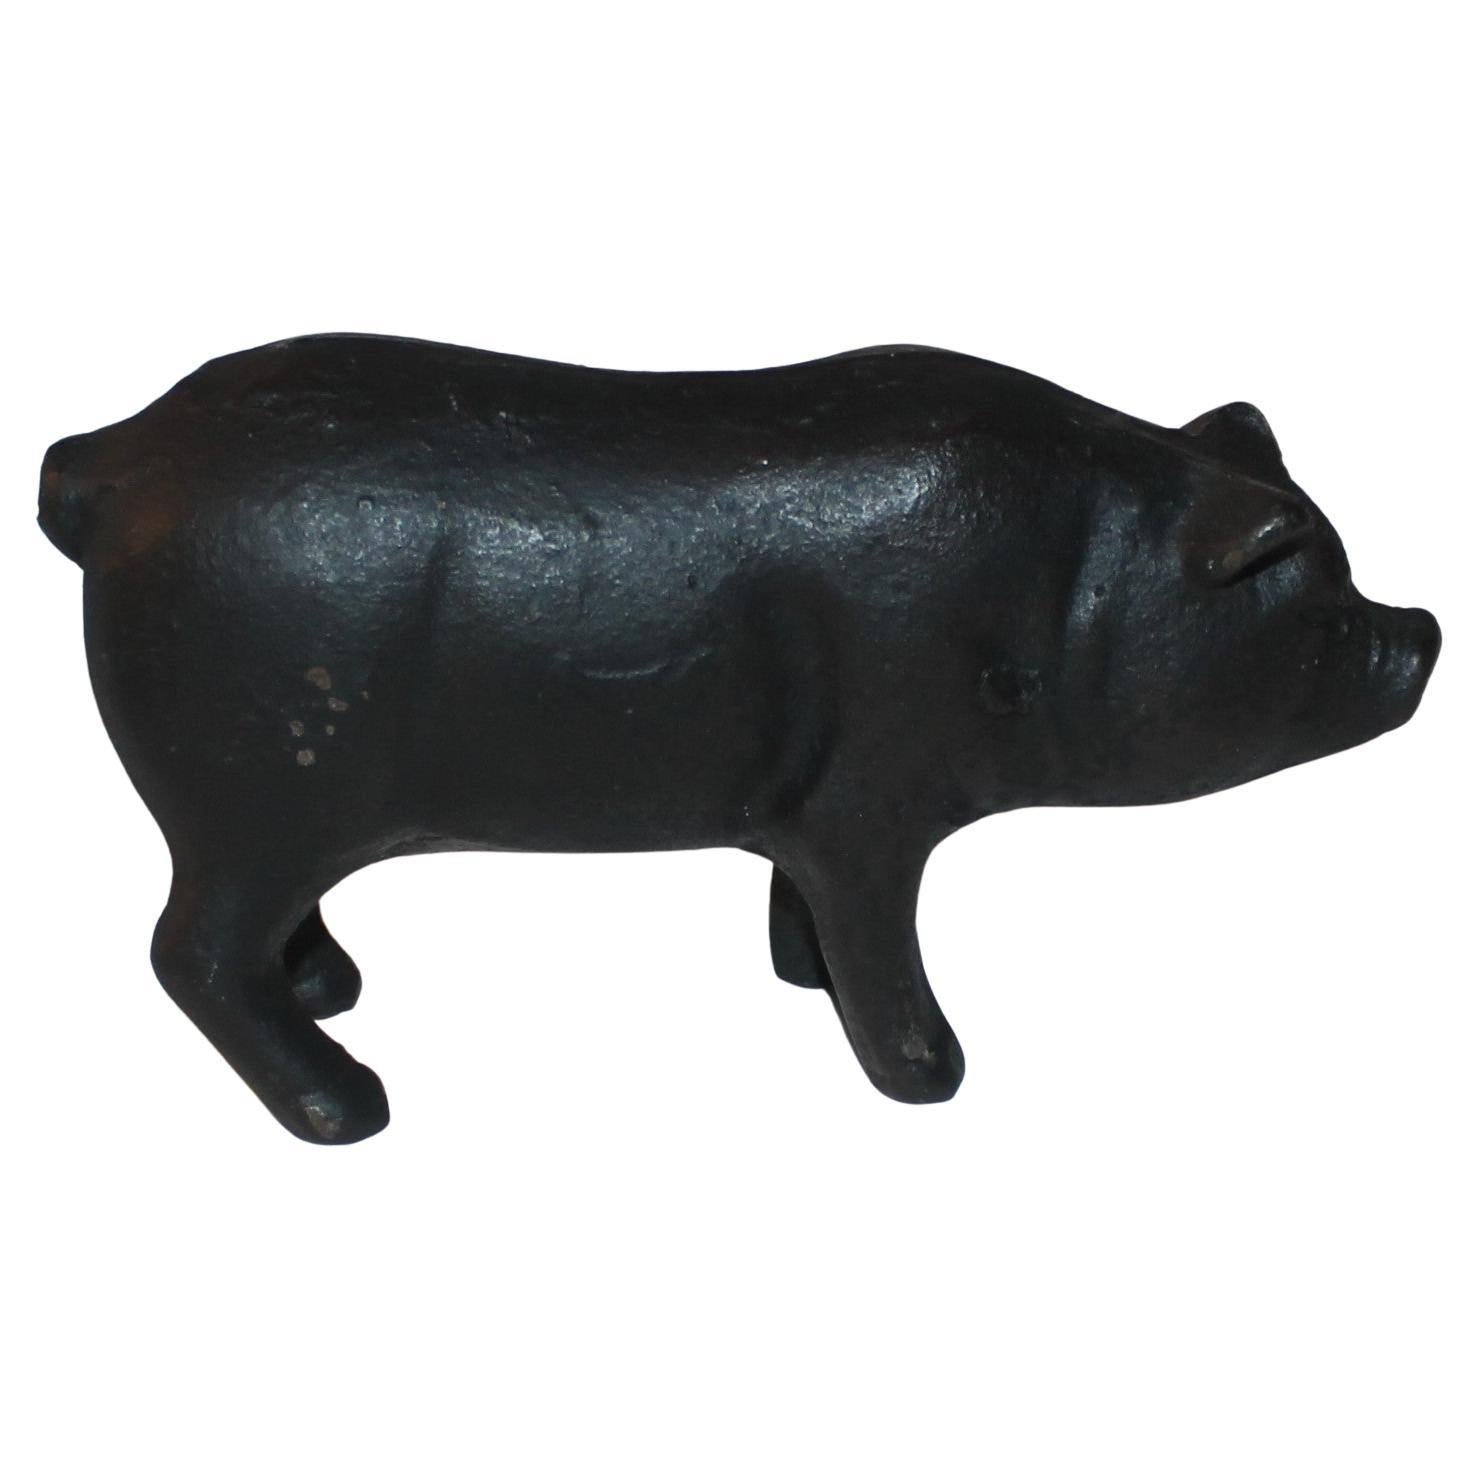 Original Painted Iron Pig